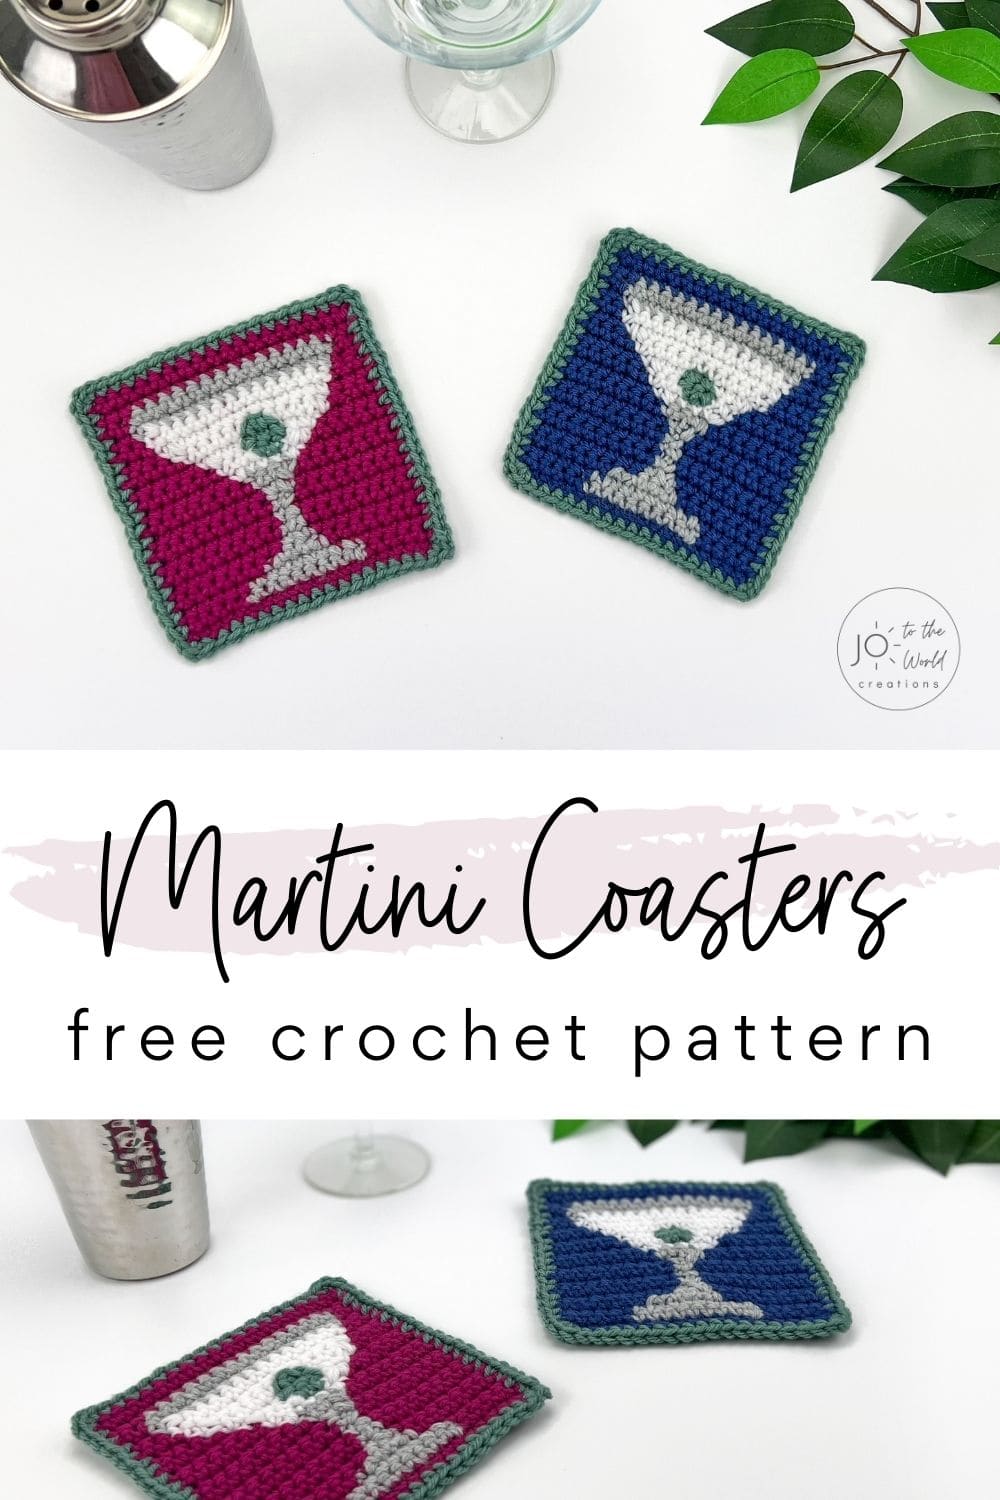 Martini Coasters Free Crochet Pattern